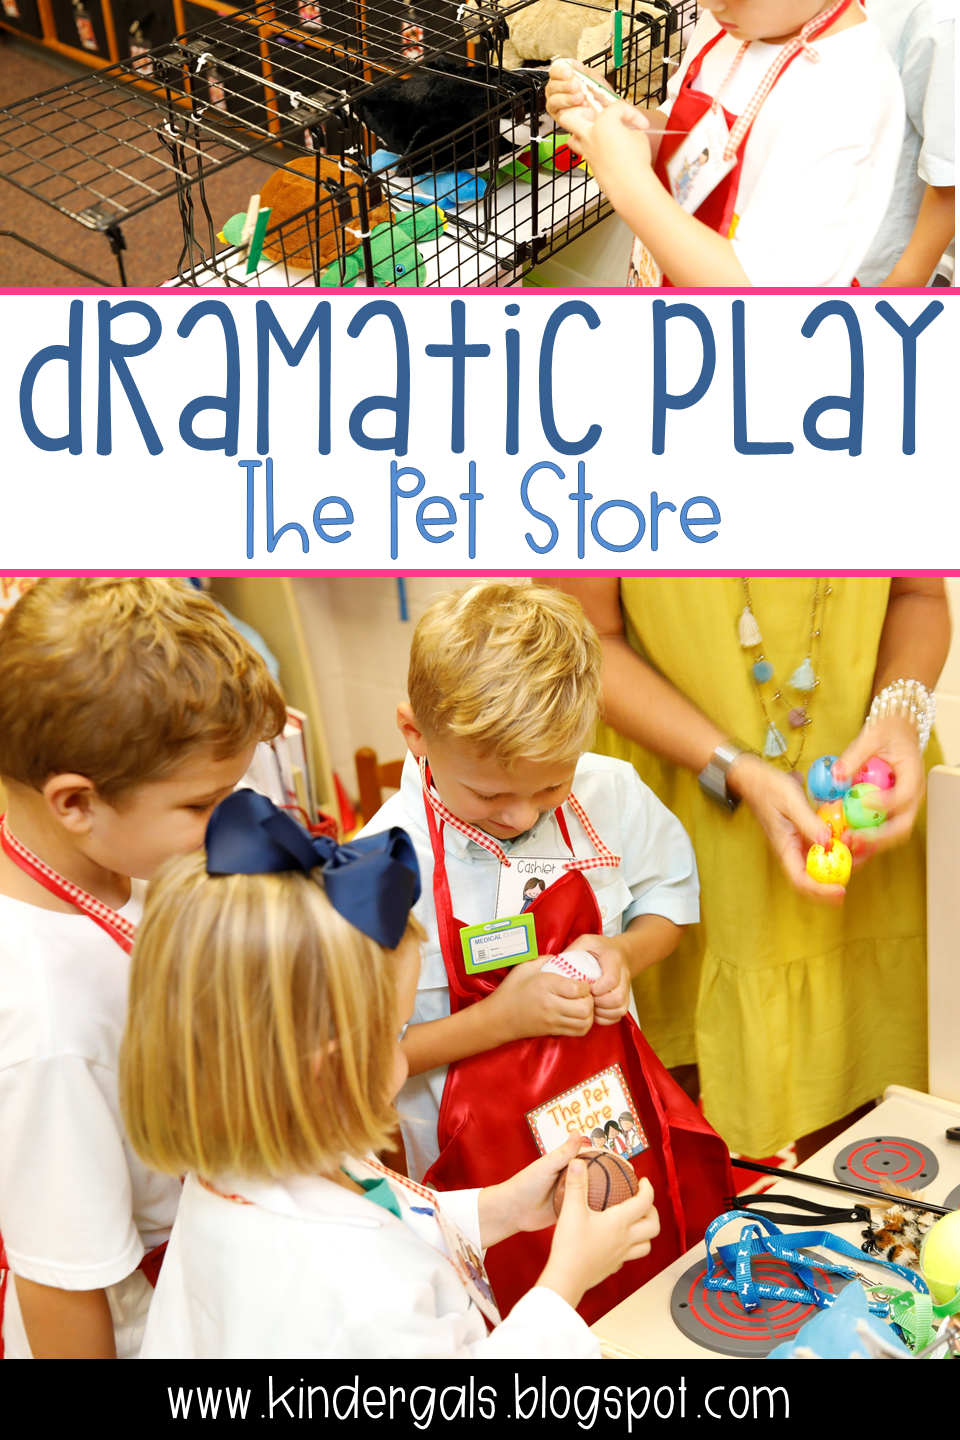 Pet Shop Dramatic Play - Play to Learn Preschool